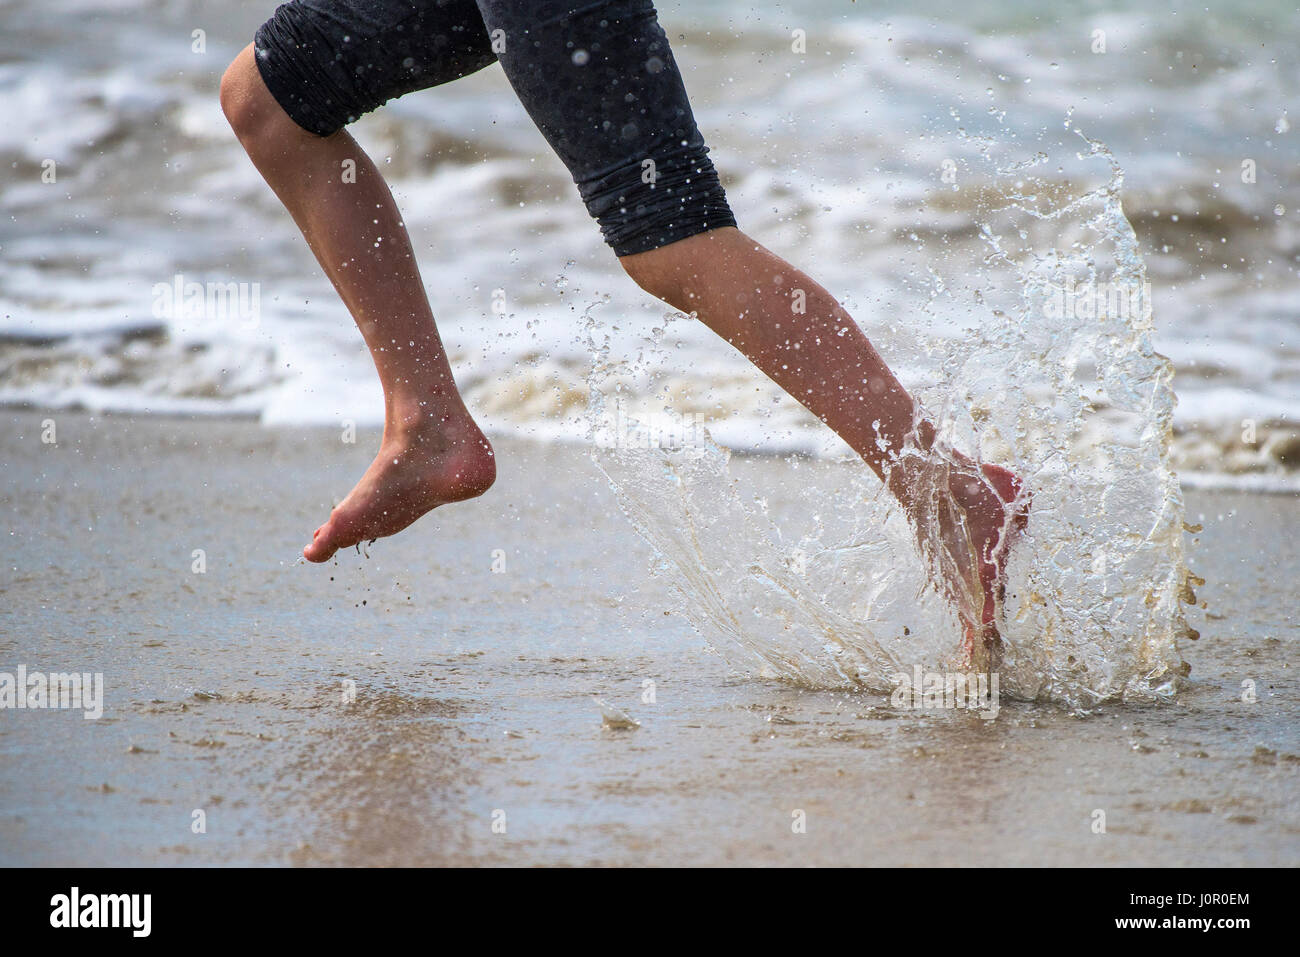 Fistral Newquay Person running along shoreline Splash Splashing Runner Spray Water Barefoot Energy Energetic Seaside Tourism Beach Holiday Stock Photo